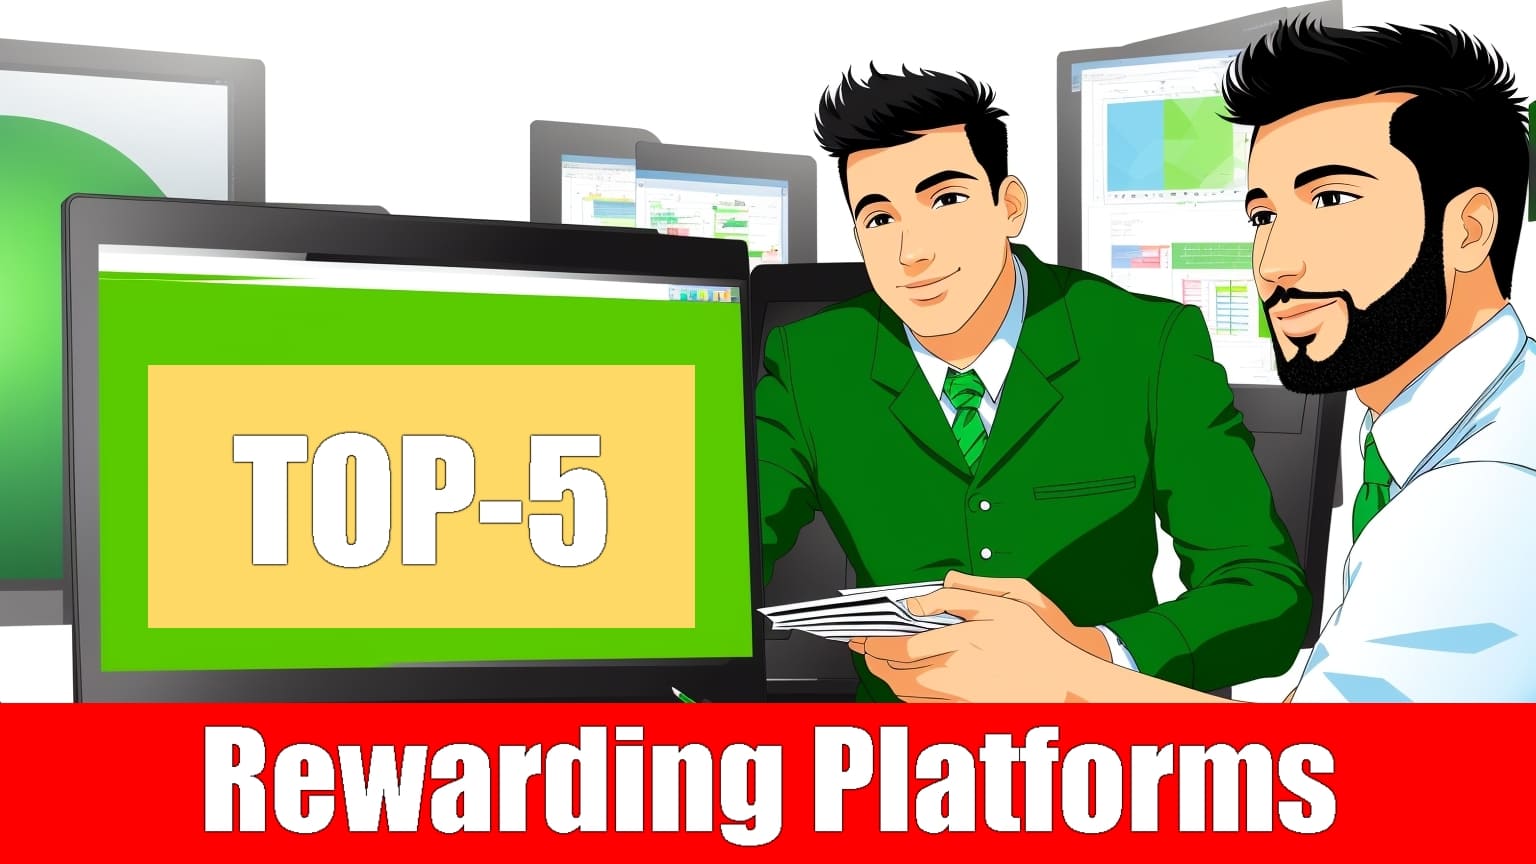 Top 5 Digital Earnings: A Guide to Rewarding Platforms